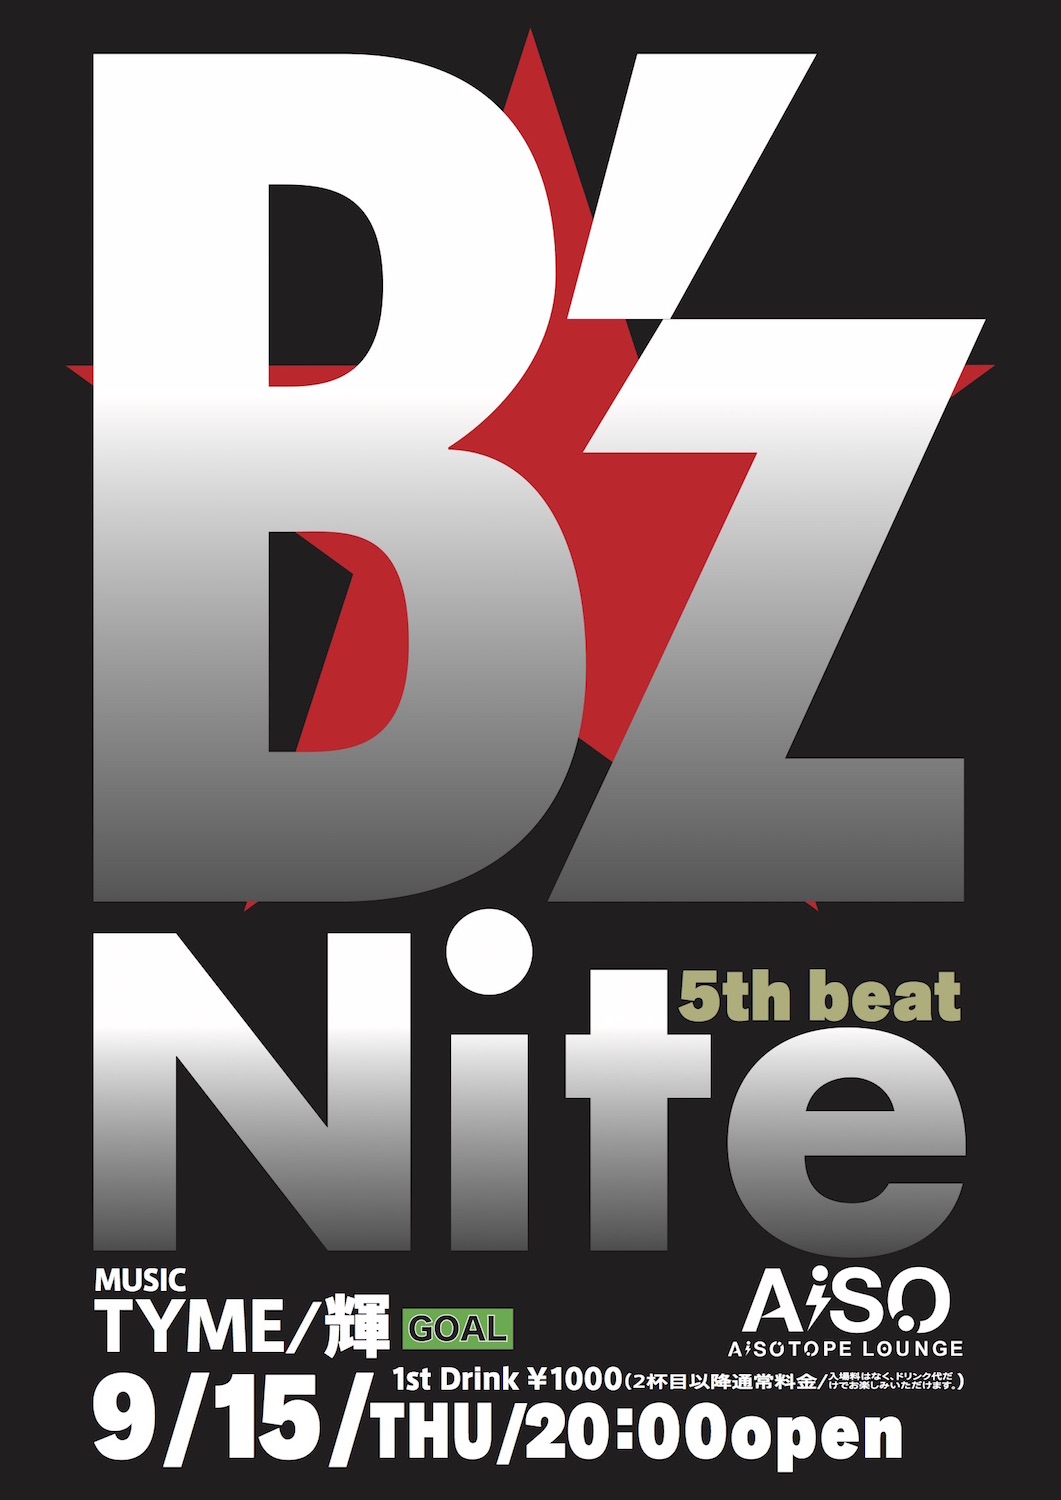 B'z Nite 5th Beat